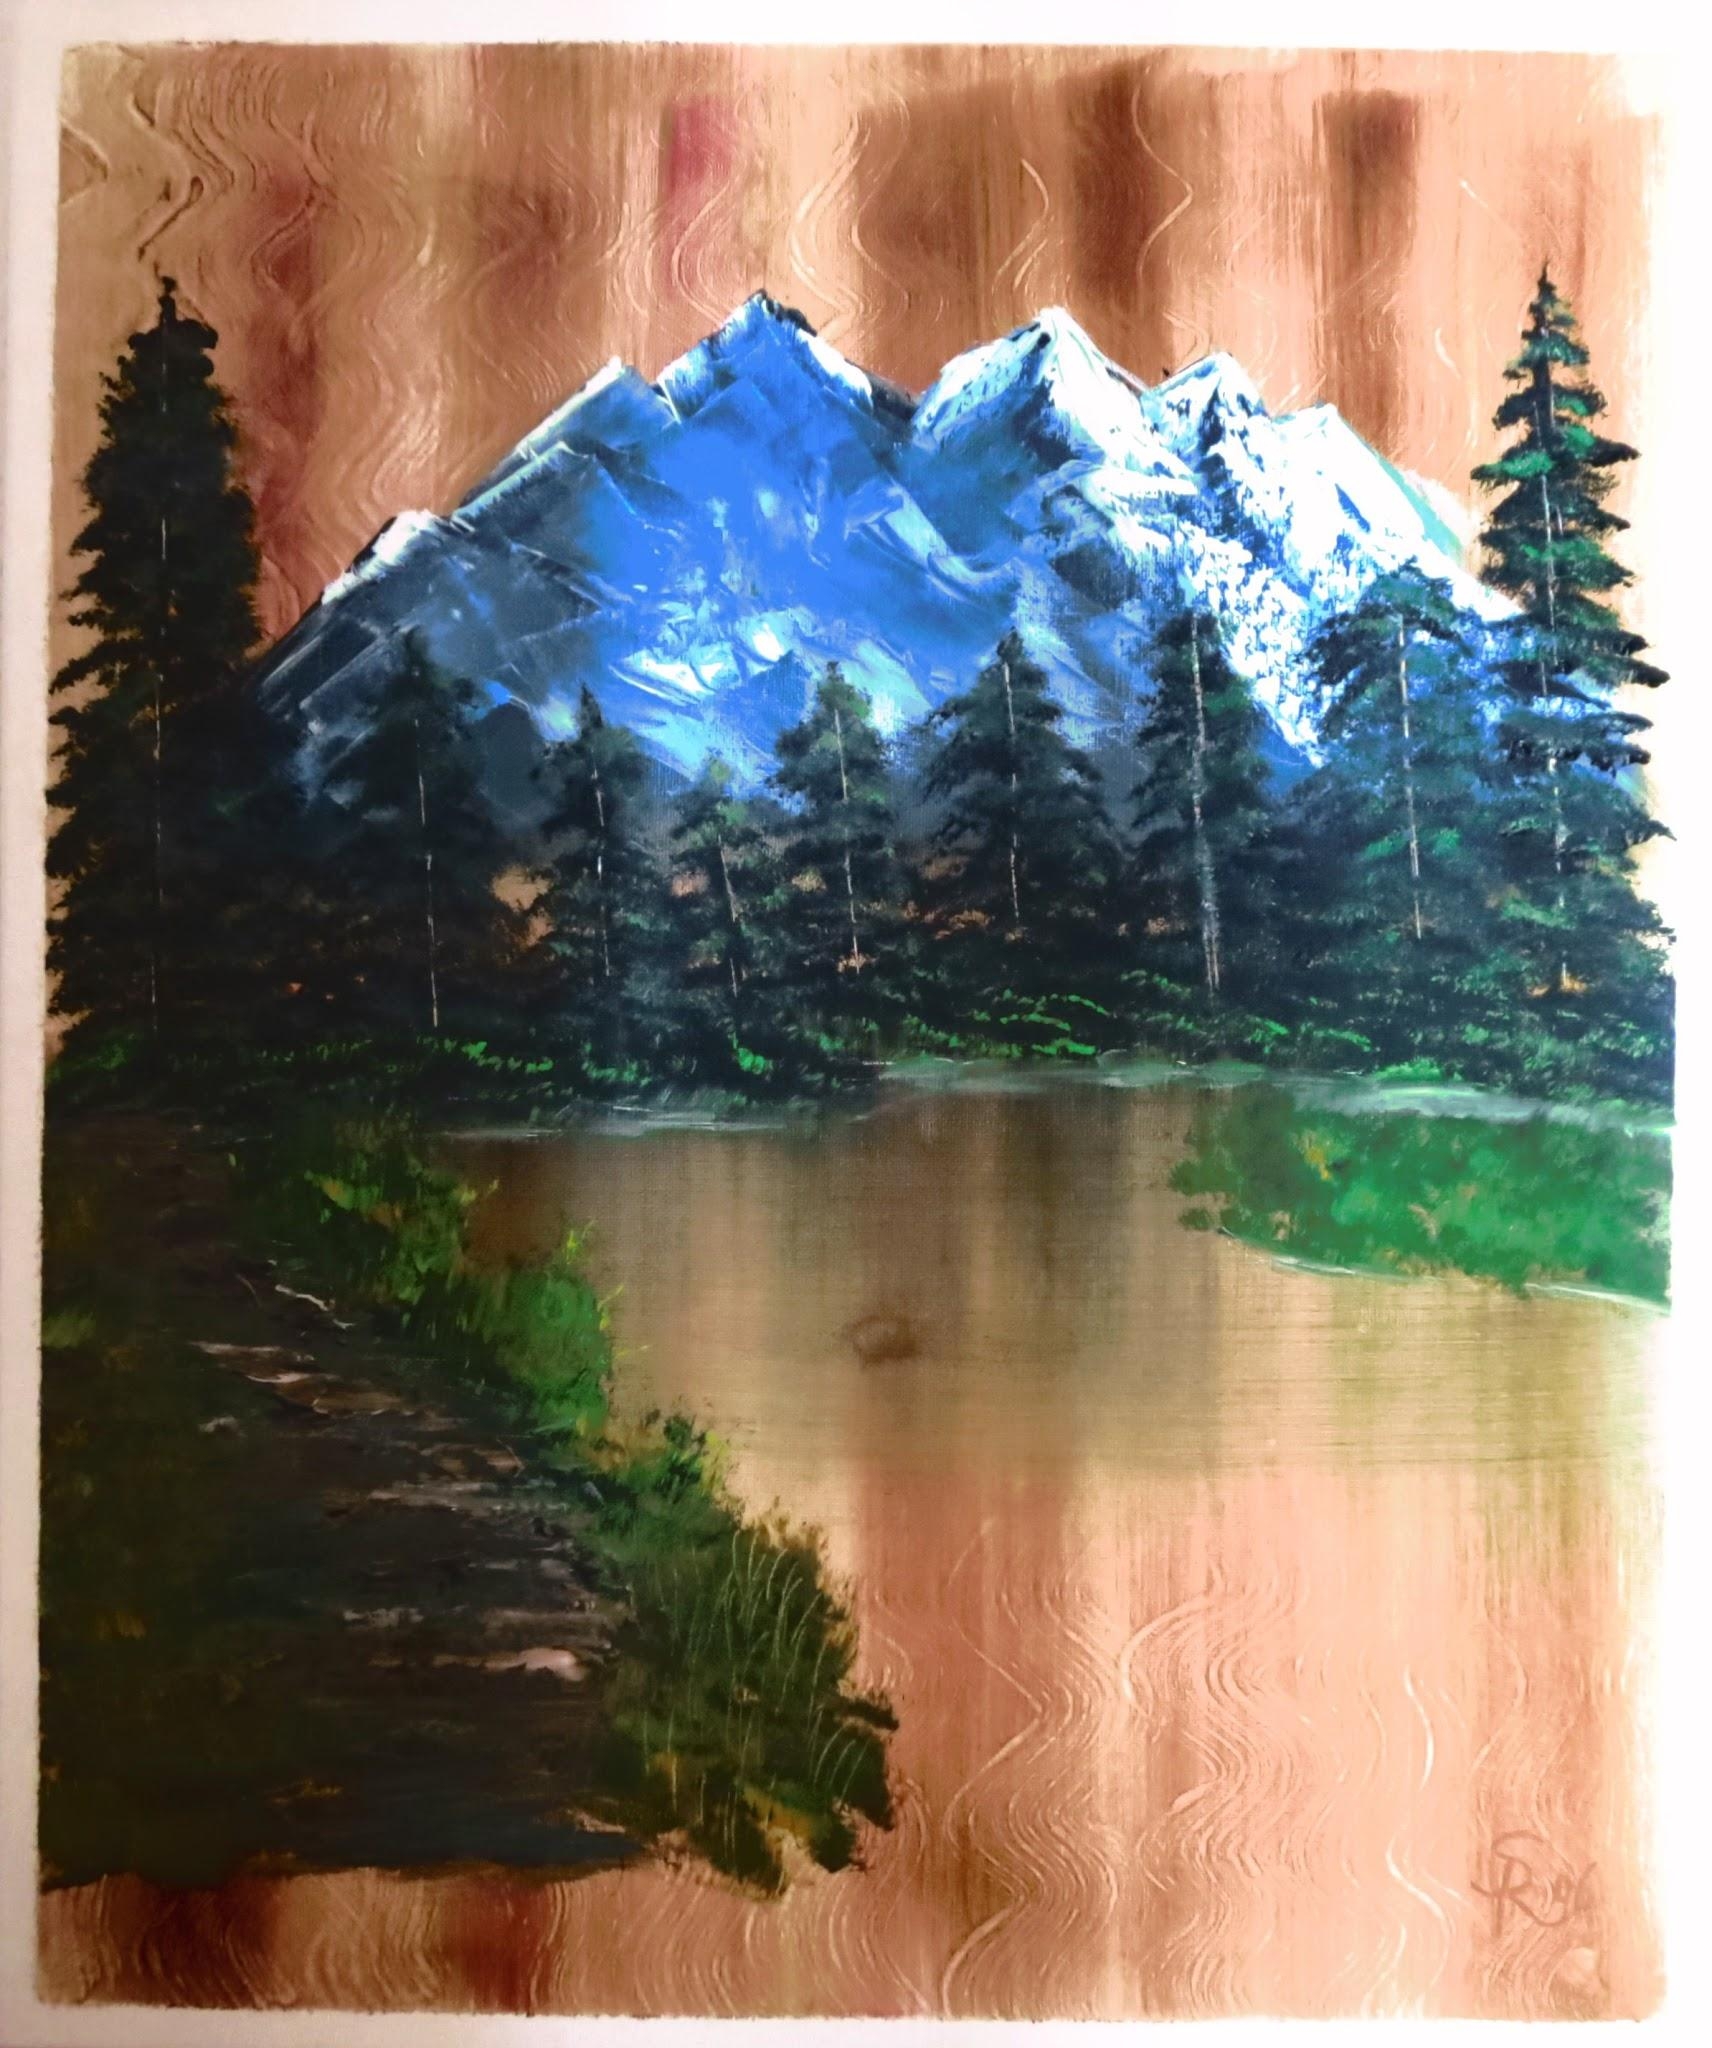 Relaxen am Bergsee 
Ölbild auf Leinwand,fertig zum Aufhängen 50cm x 60 cm 
#ölmalerei #leinwandbild #sale #ölpainting 